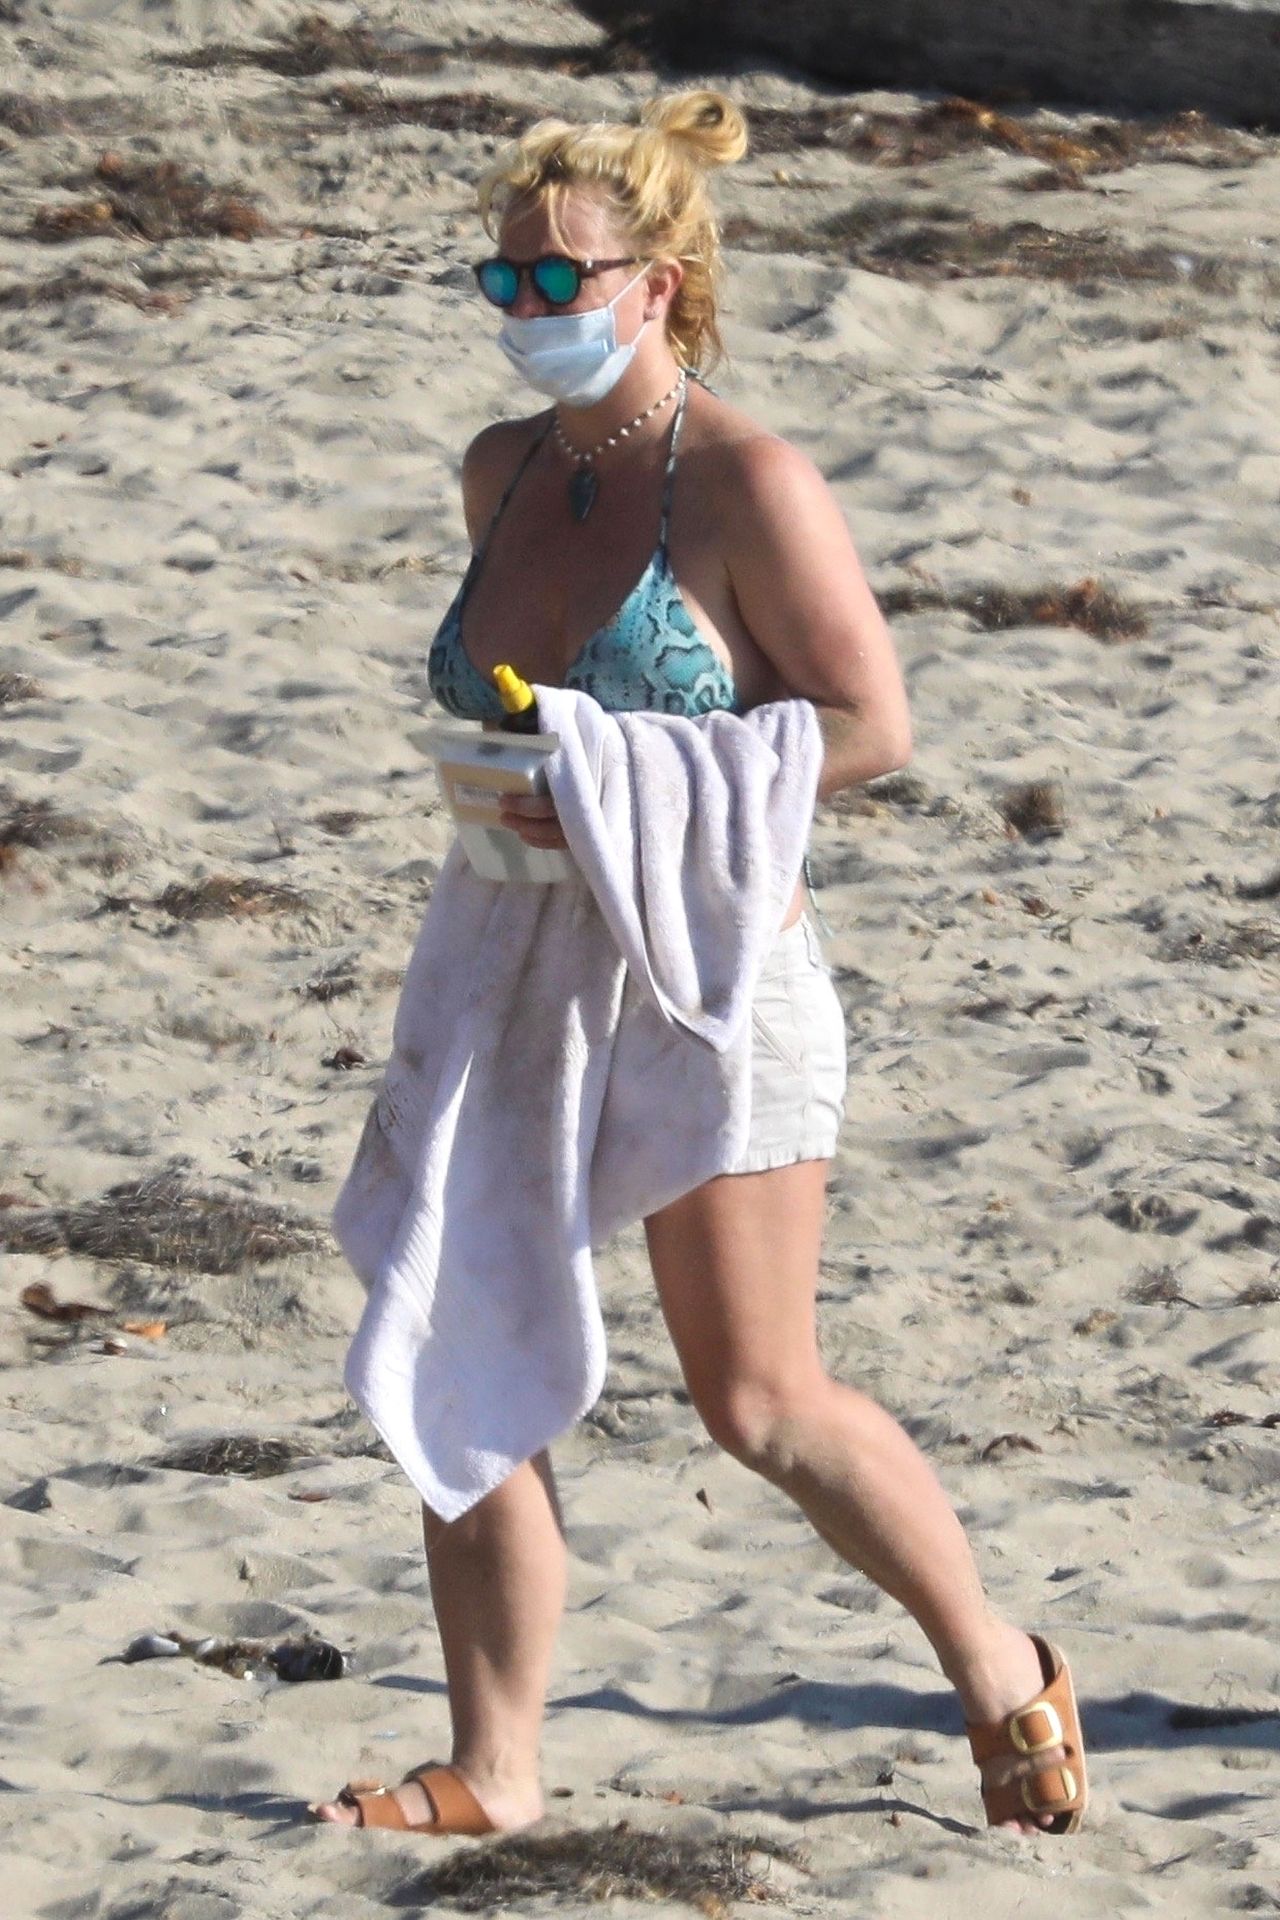 Britney Spears Displays He
r Bikini Body as She Sunbathes at the Beach in Malibu (84 Photos)